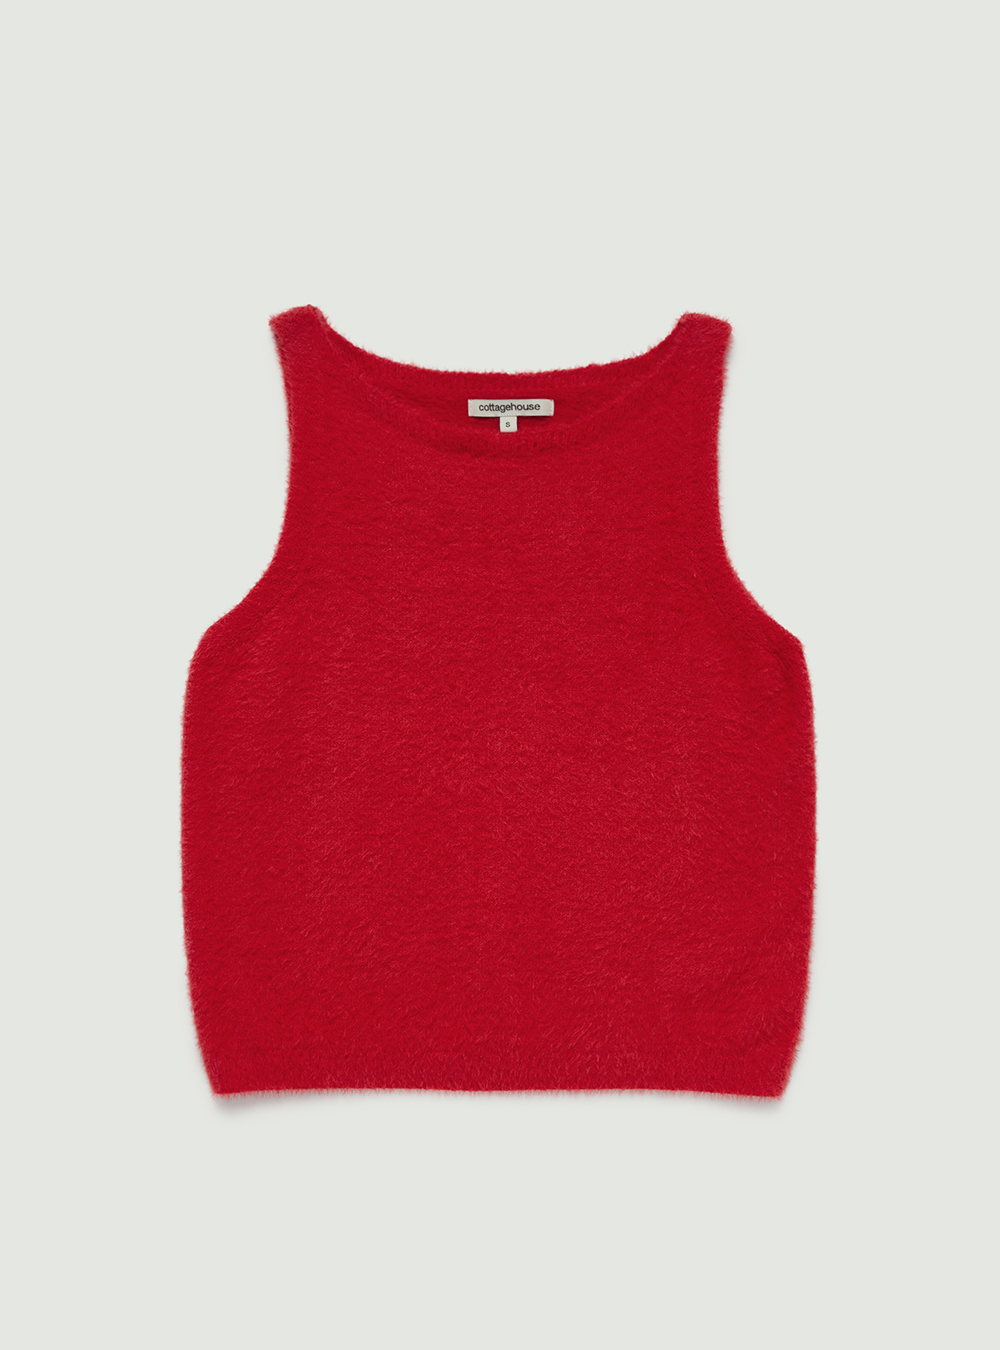 Classic voat neck knit vest. Red